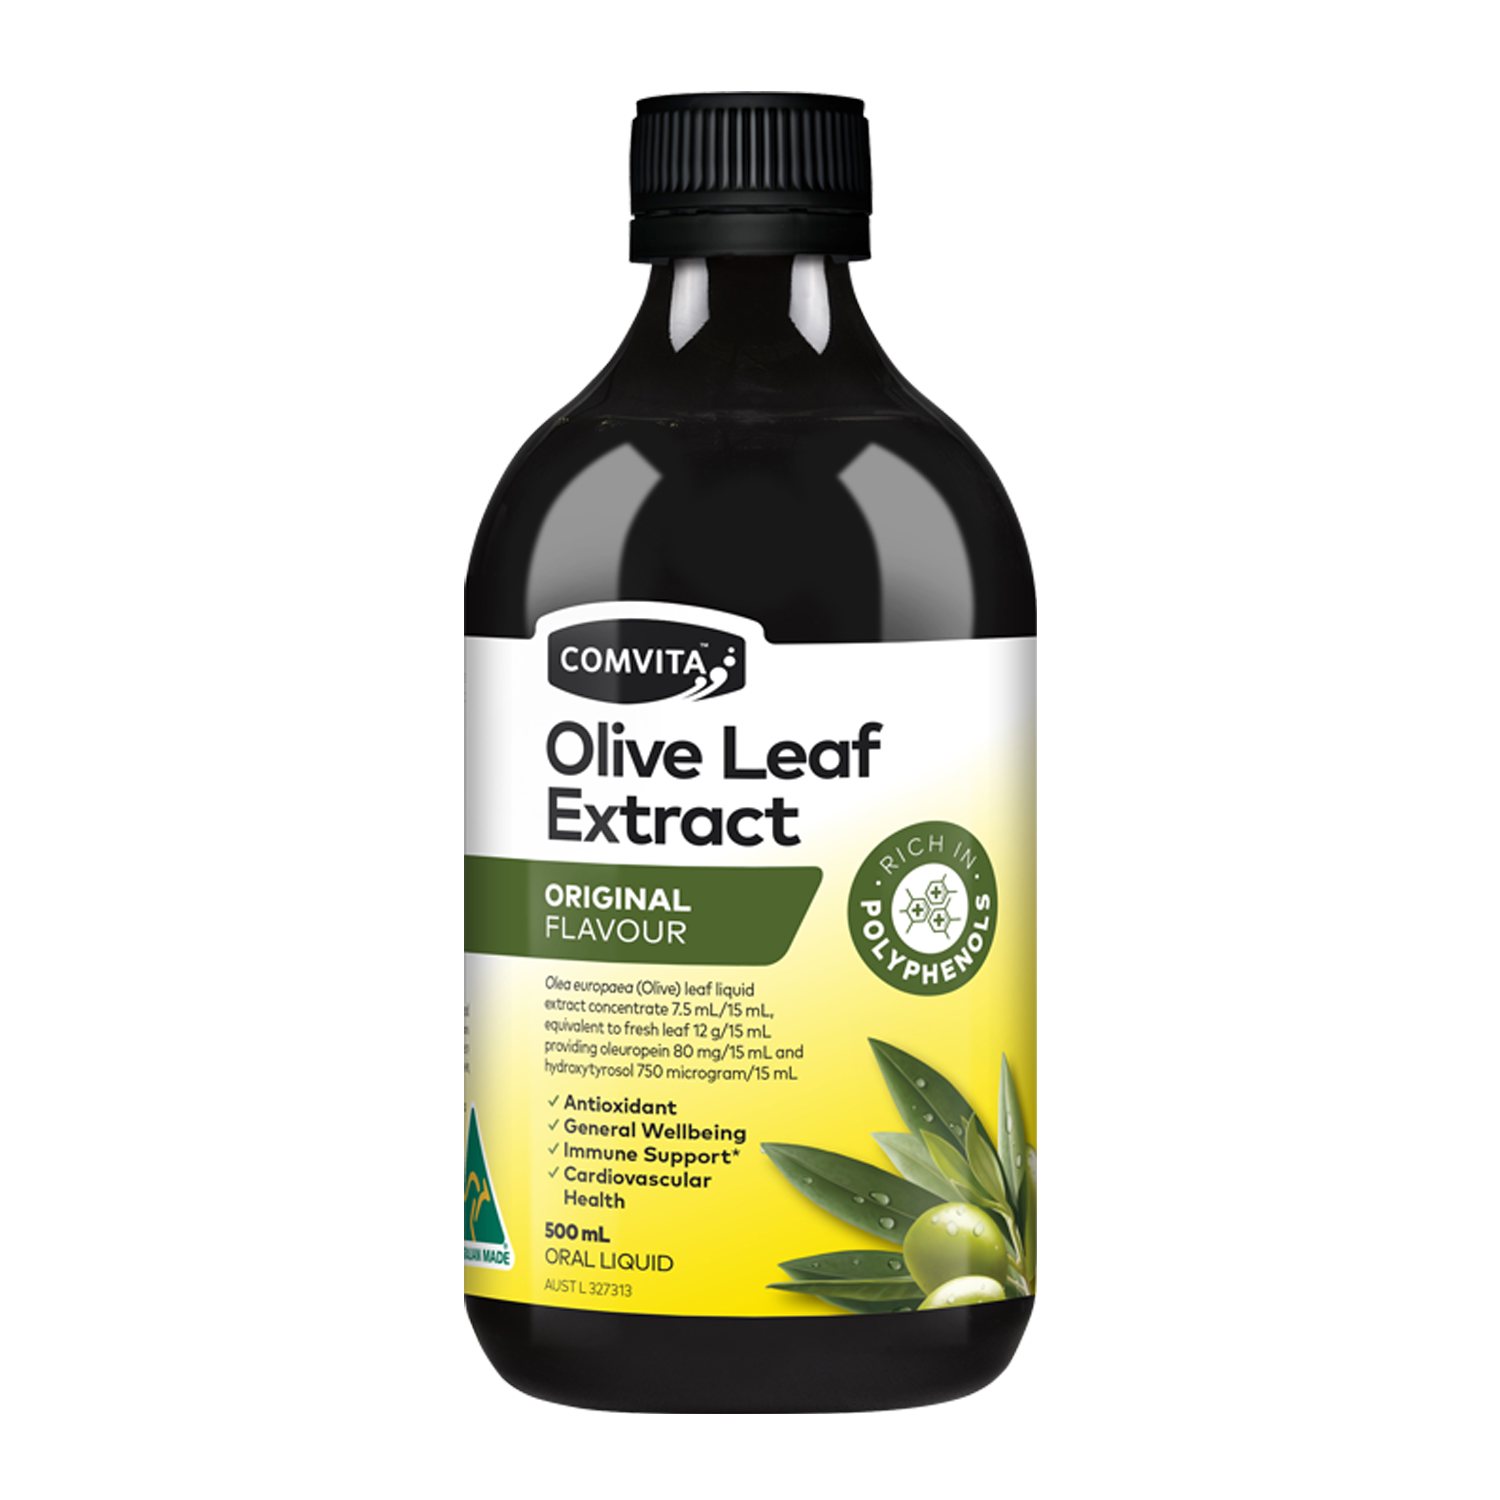 Comvita Olive Leaf Extract - Natural Flavor, 500 ml.